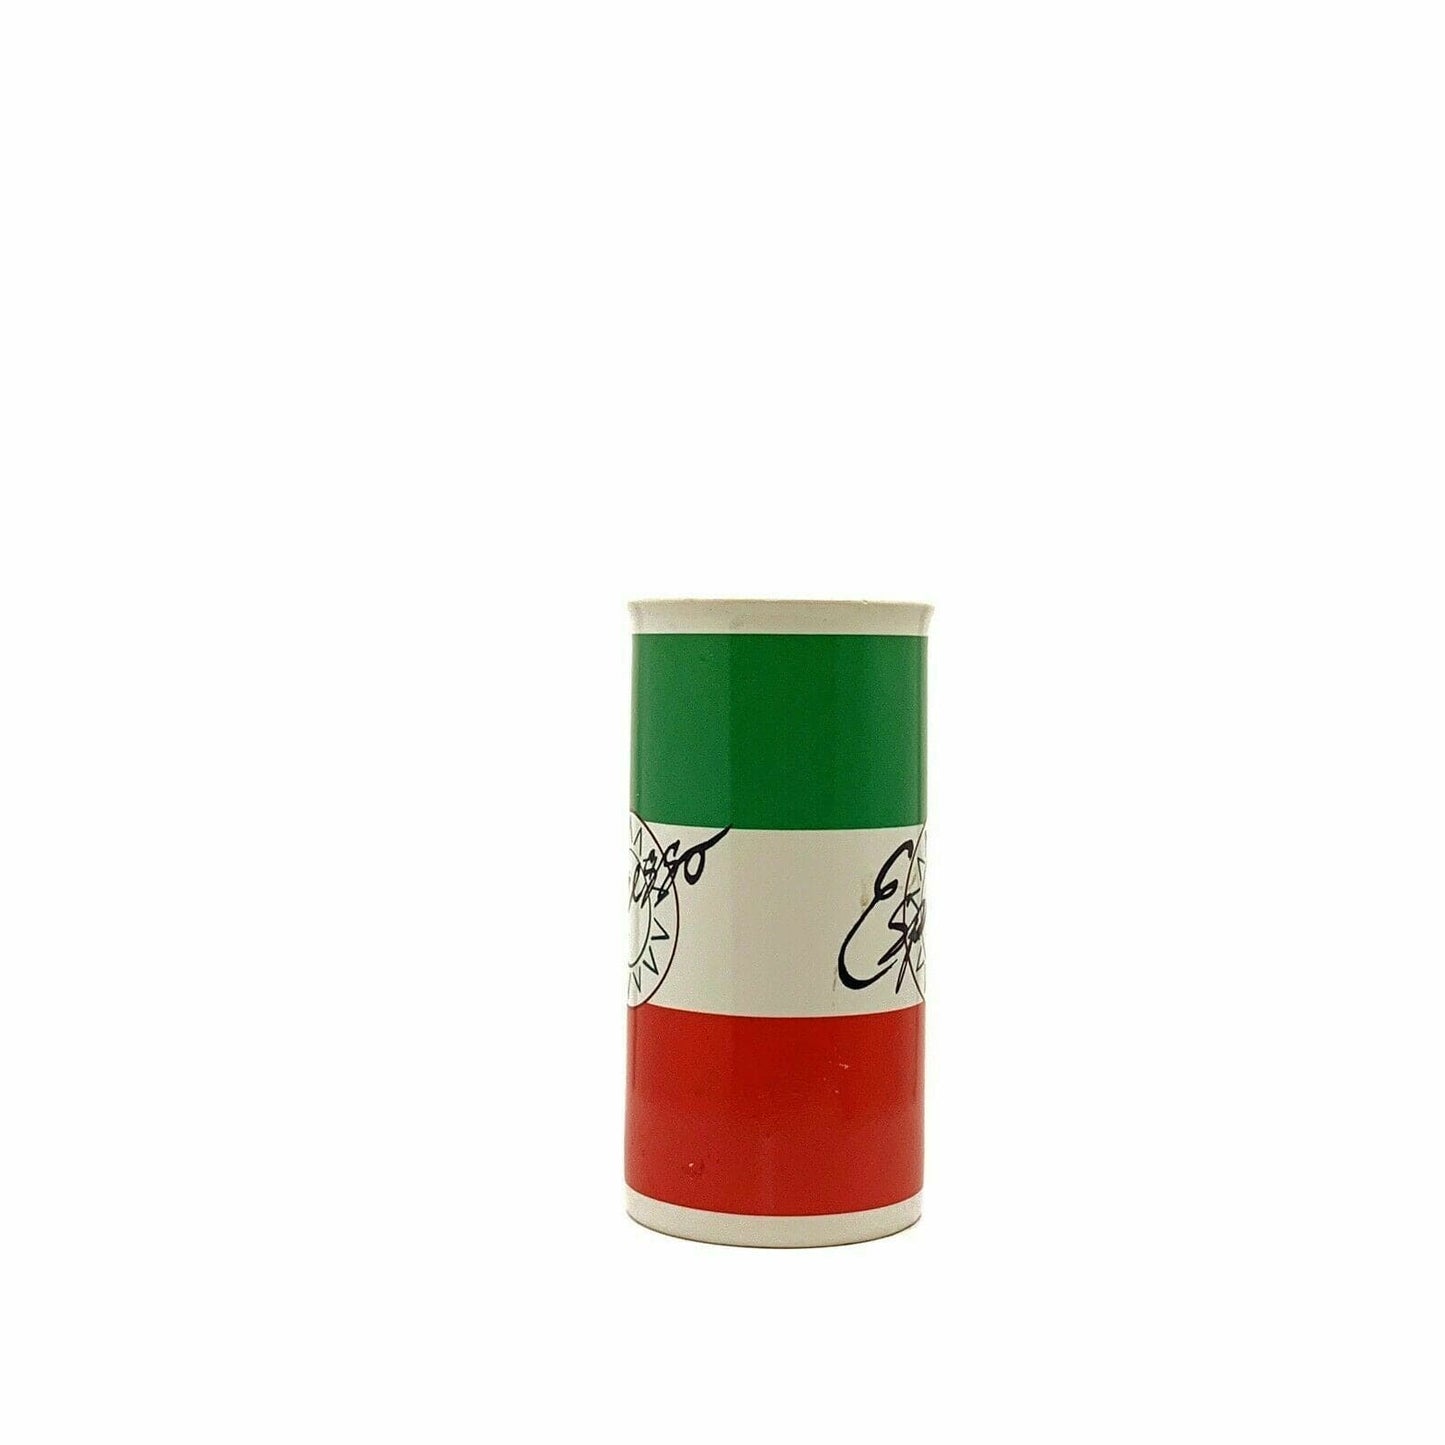 Vibrant Papel Freelance Espresso Coffee Cup - 8 fl oz, Green/White/Red, Ceramic